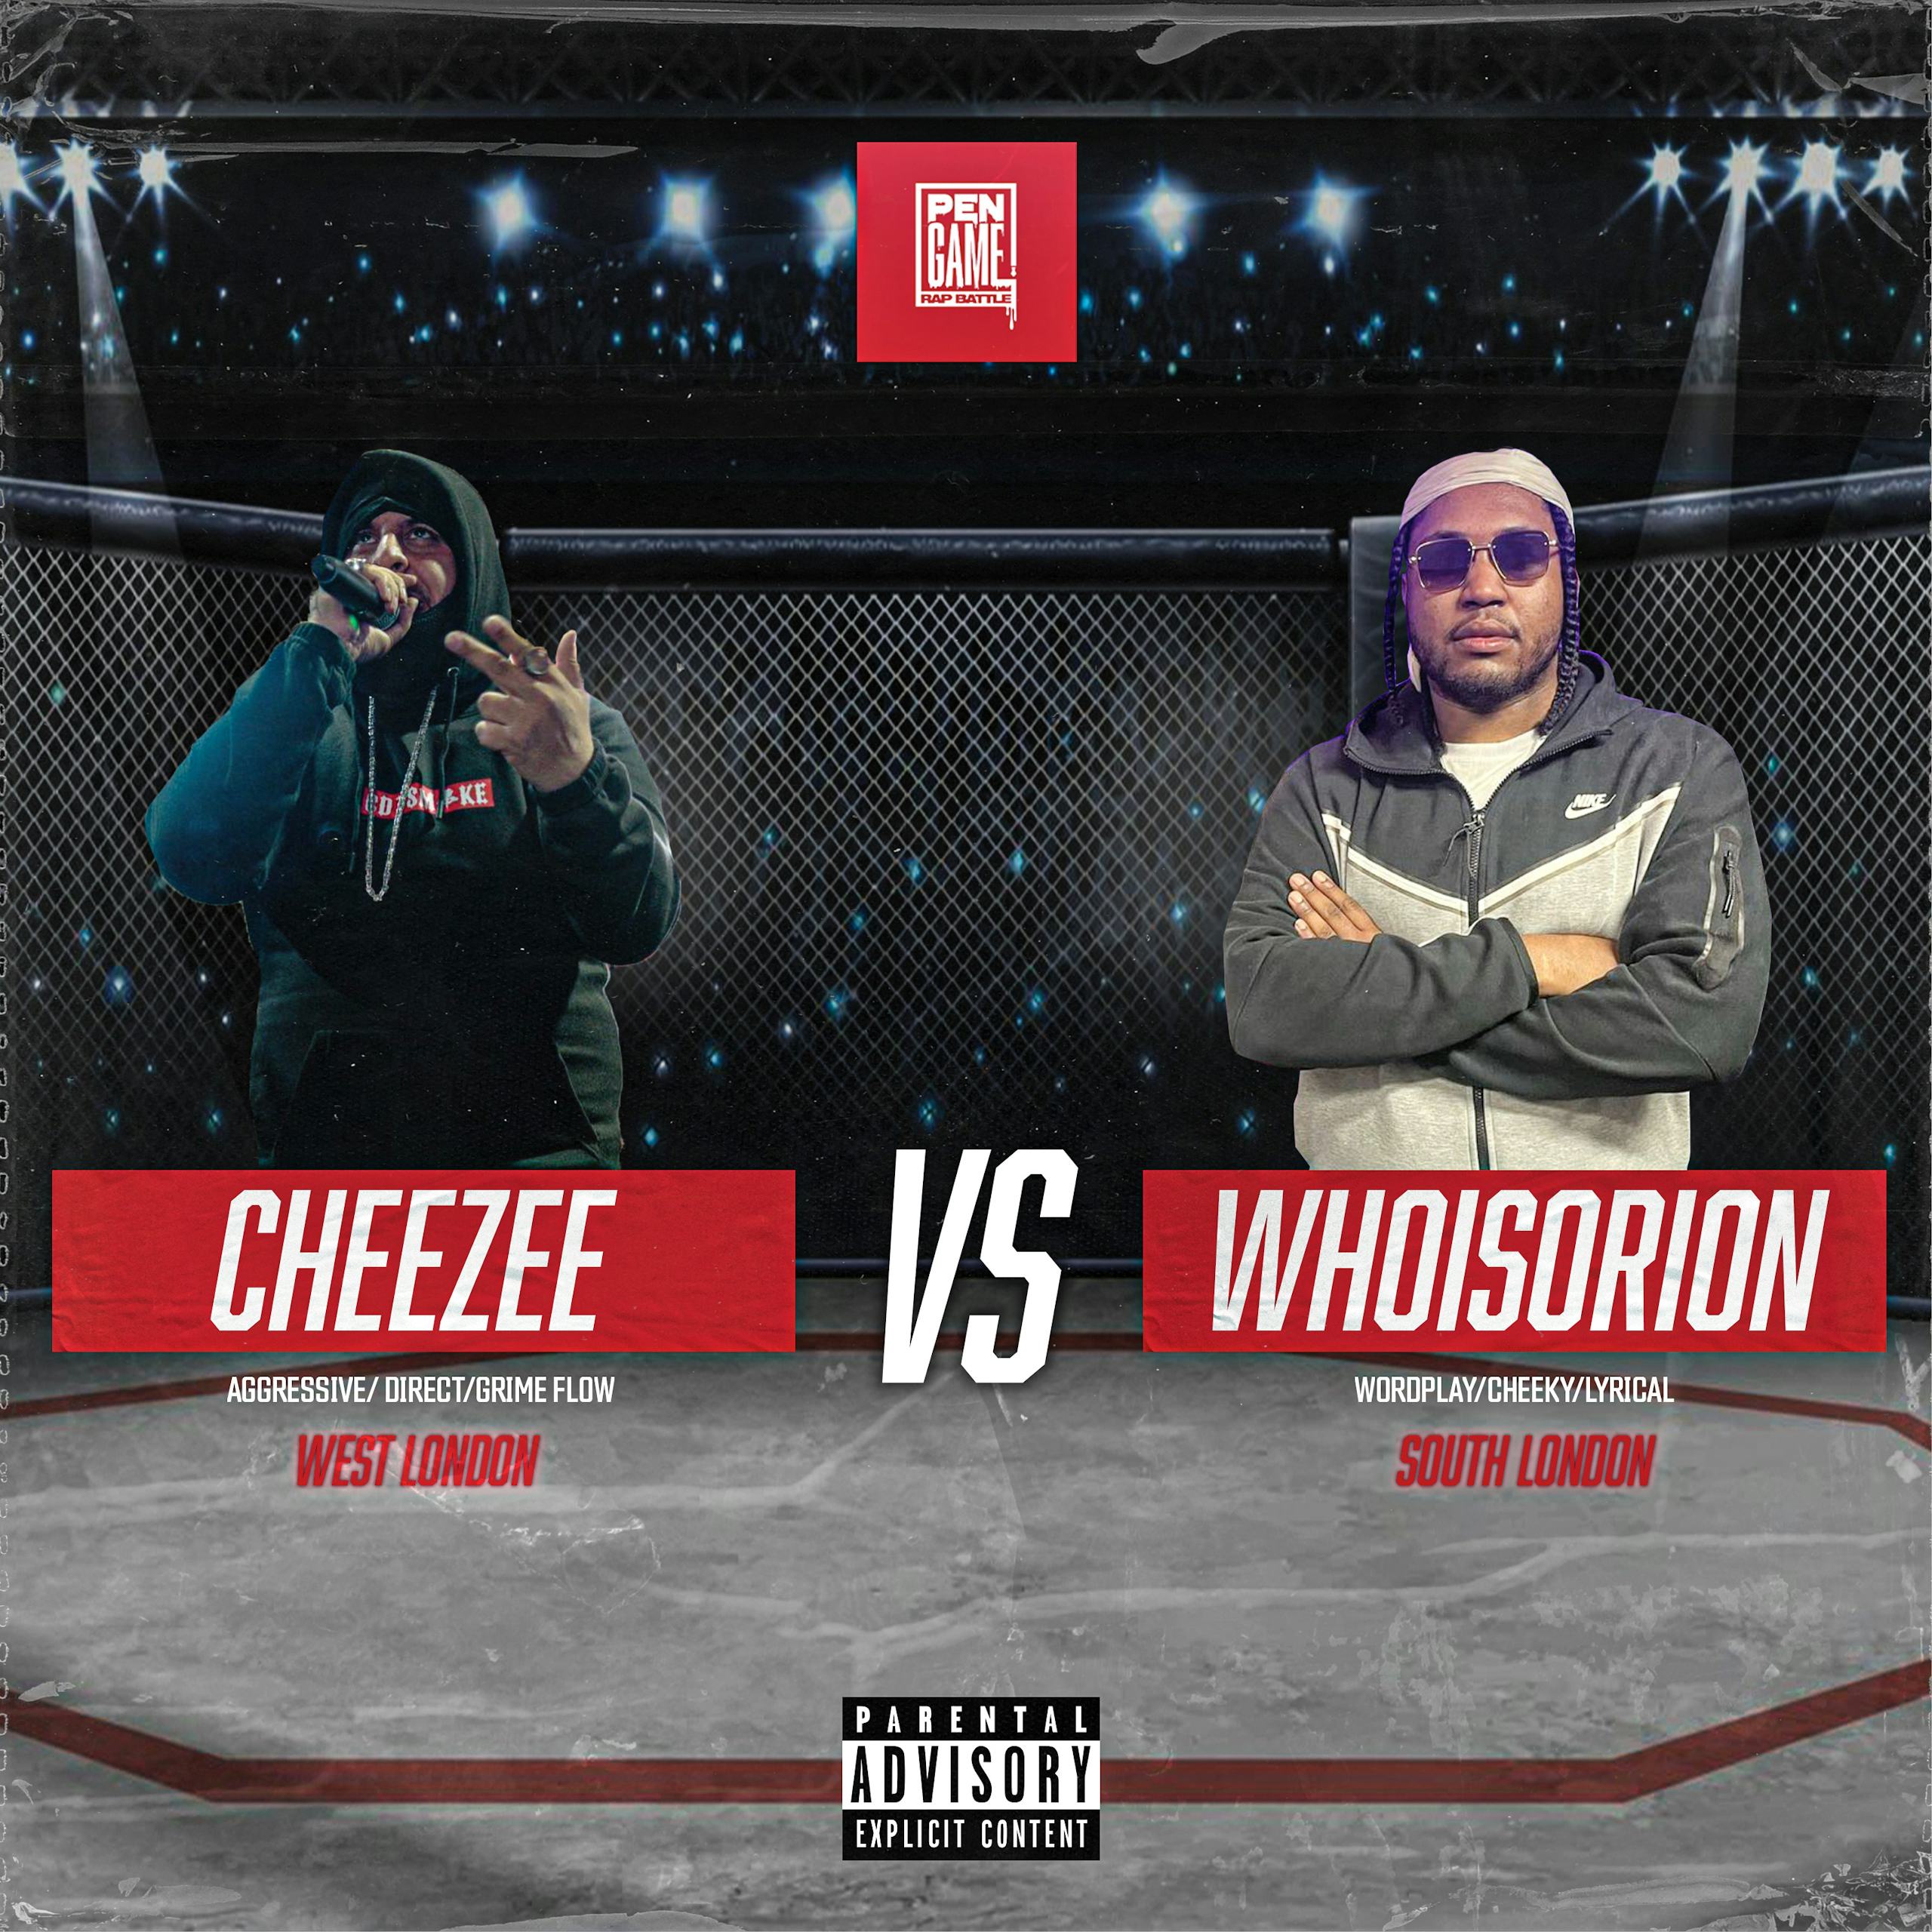 Cheezee vs WhoIsOrion - PenGame Rap Battle S4:EP2